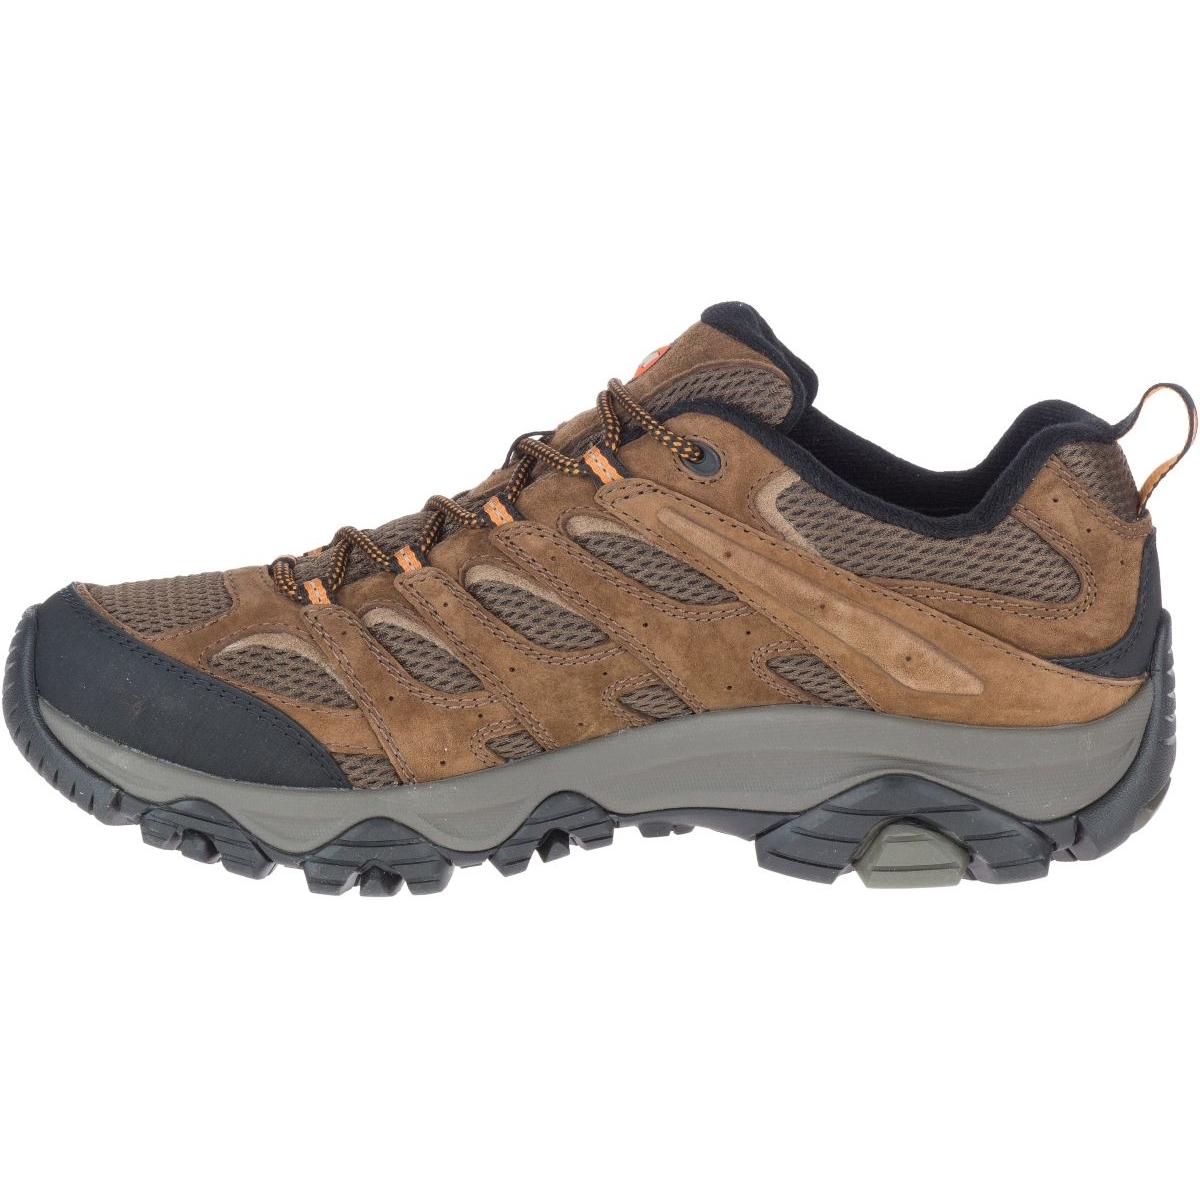 Merrell Men's Moab 3 GORE-TEX Hiking Shoe Earth - J036257 EARTH - Brown, 10.5